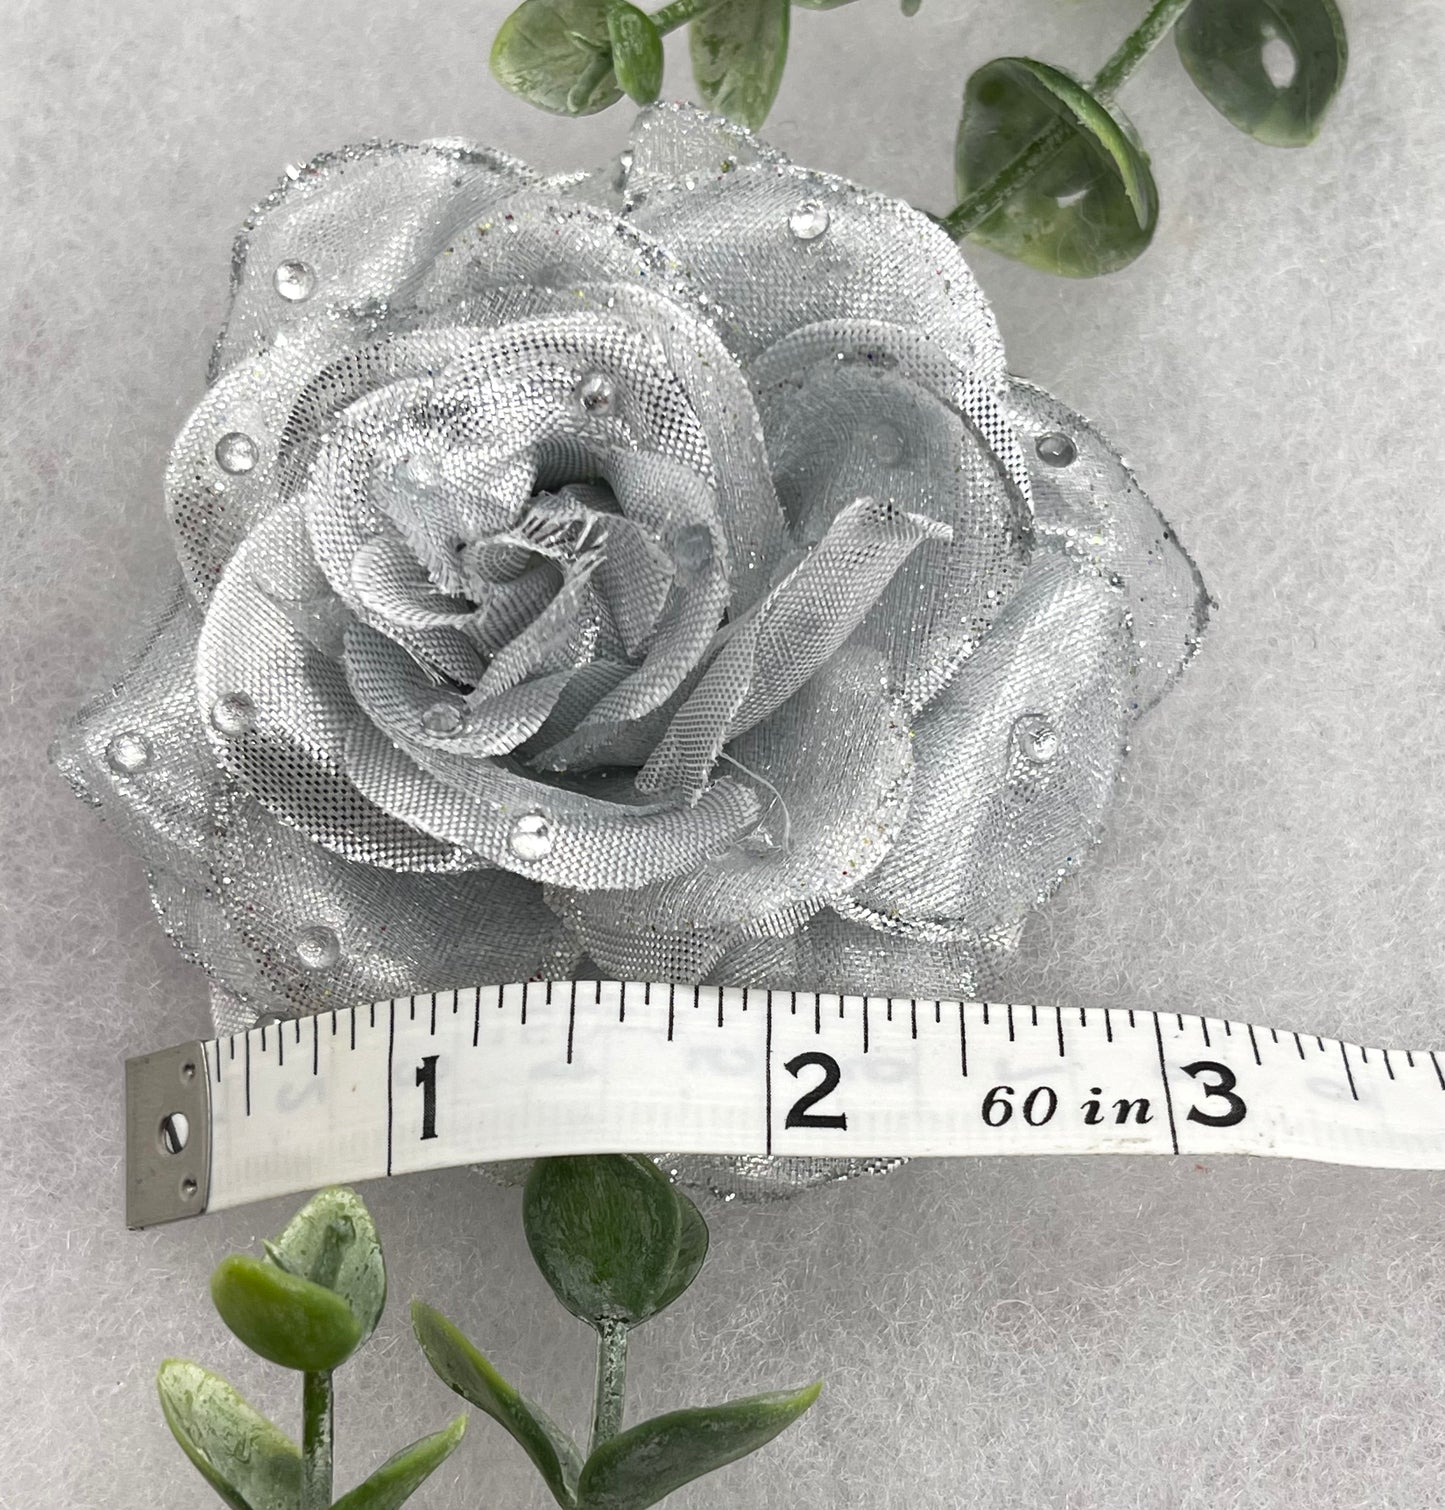 Silver Rose flower crystal rhinestone embellished alligator clip approximately 3.0” formal hair accessory wedding